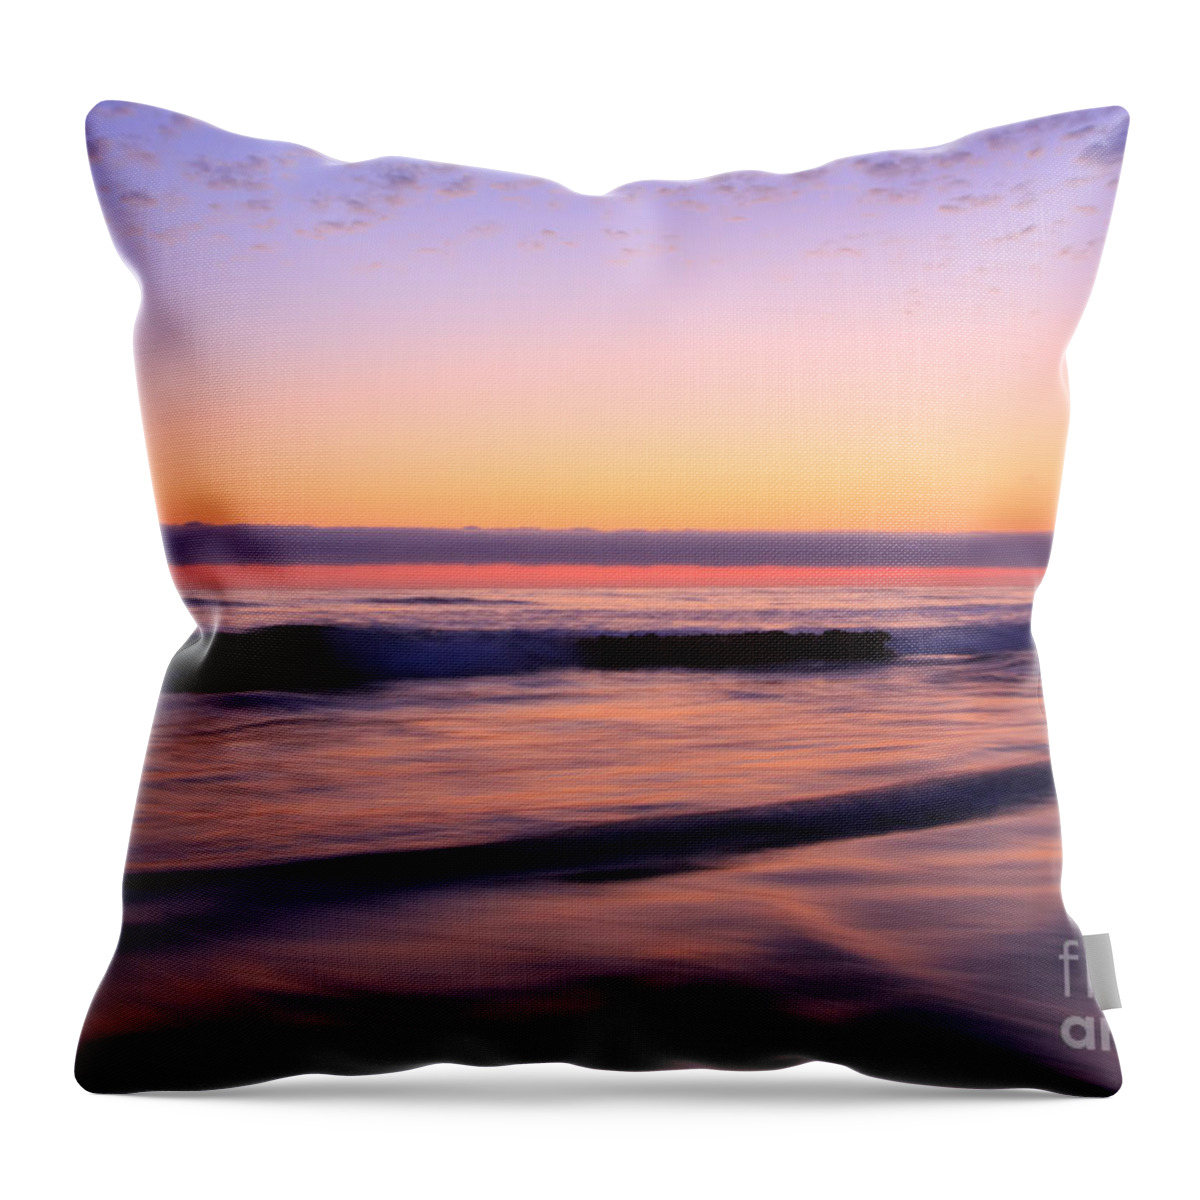 Landscapes Throw Pillow featuring the photograph Illuminated Waves Encinitas by John F Tsumas